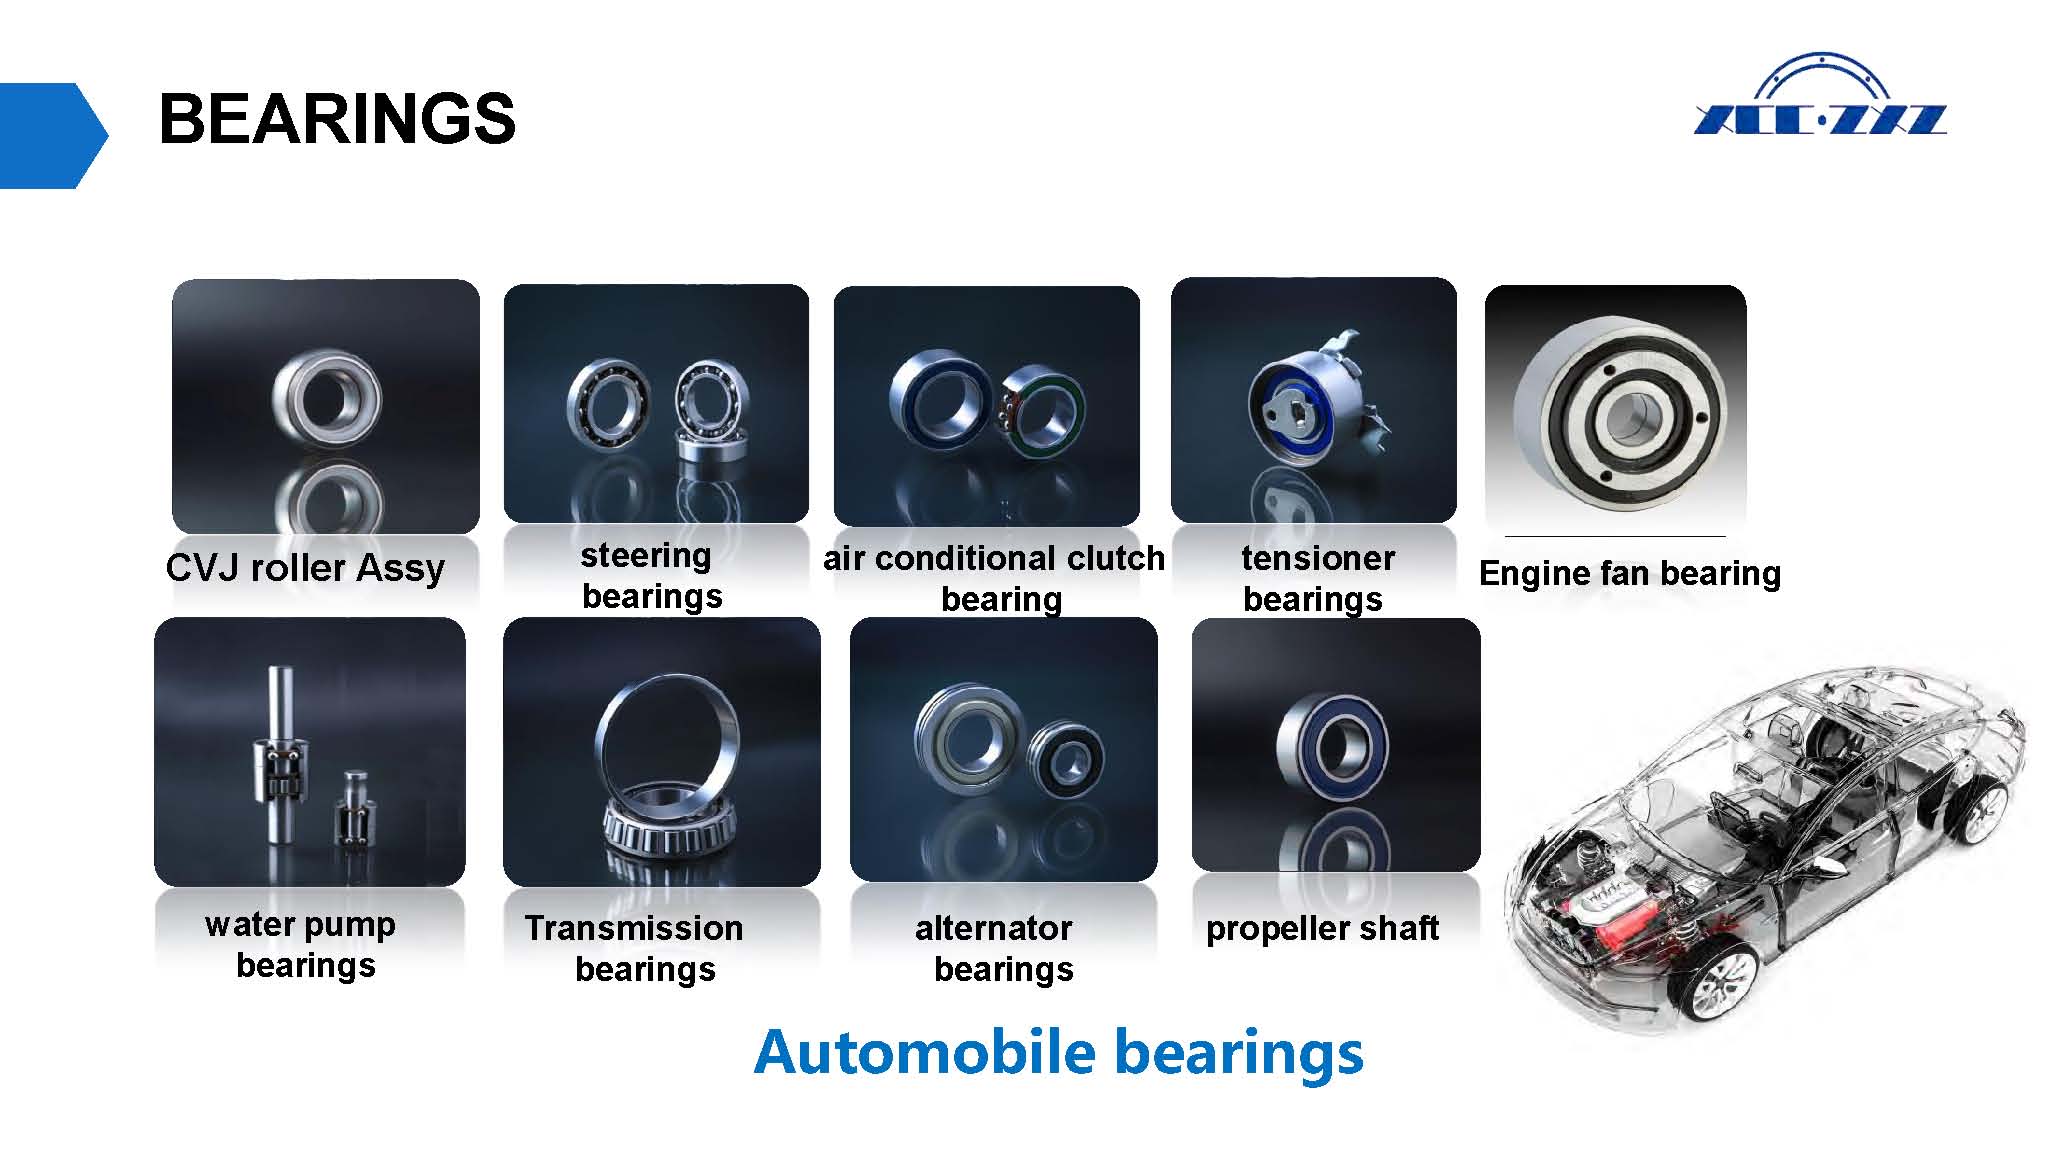 Automobile bearings